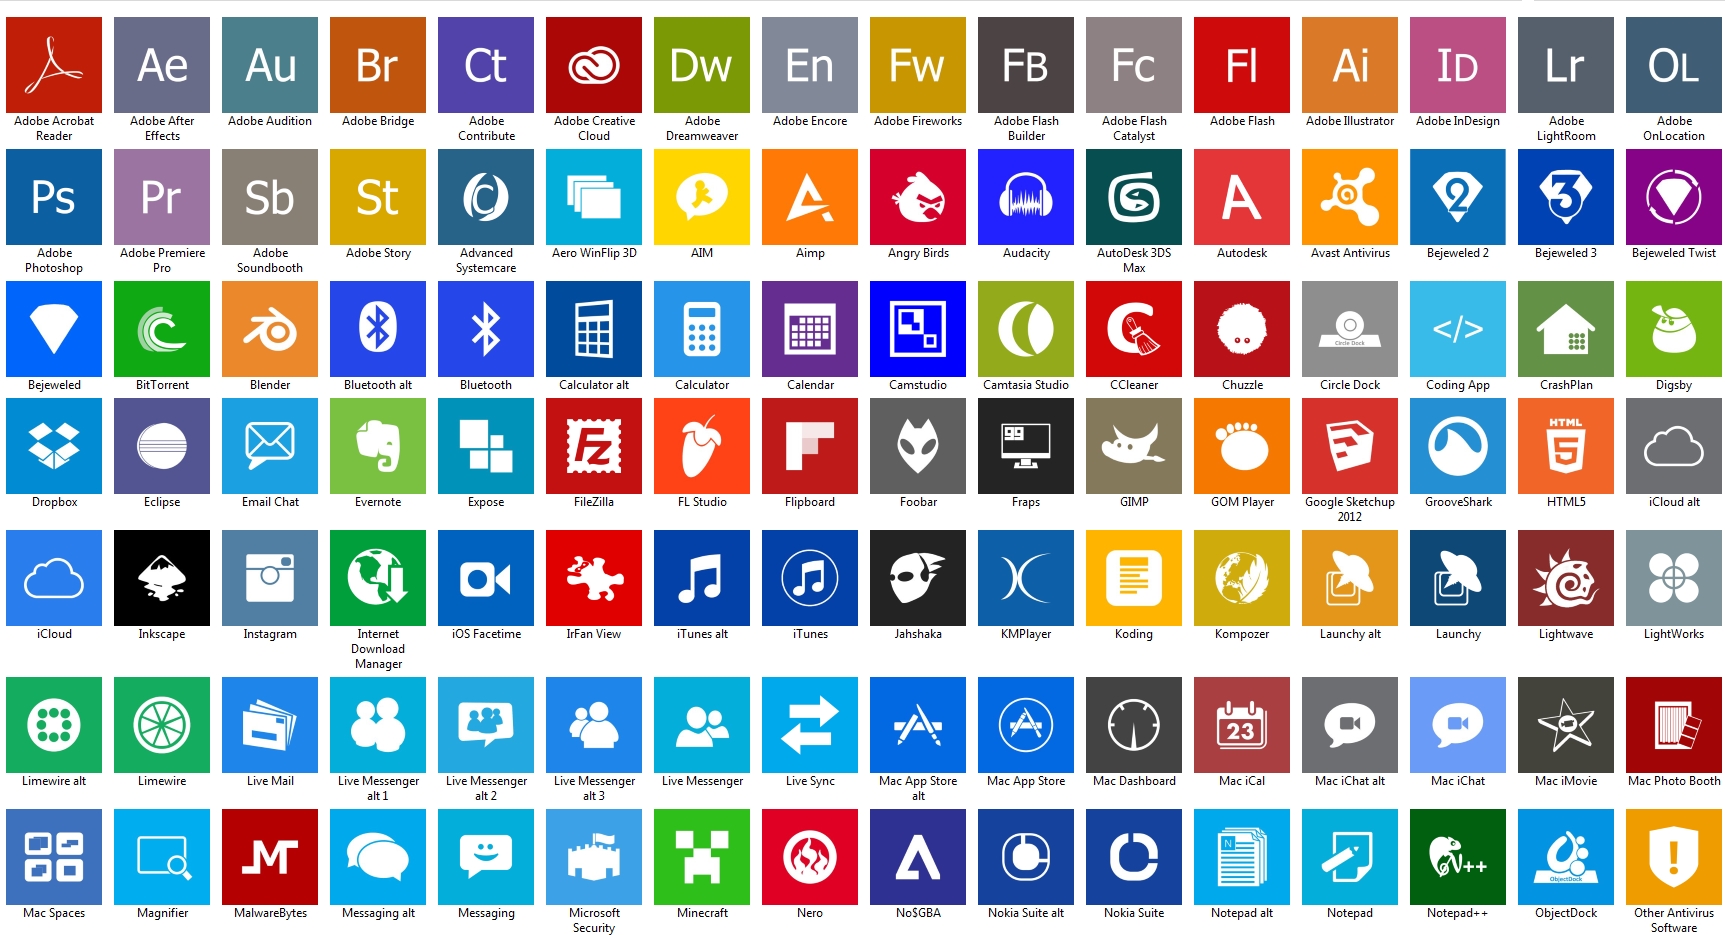 Windows 8 Metro UI Icons